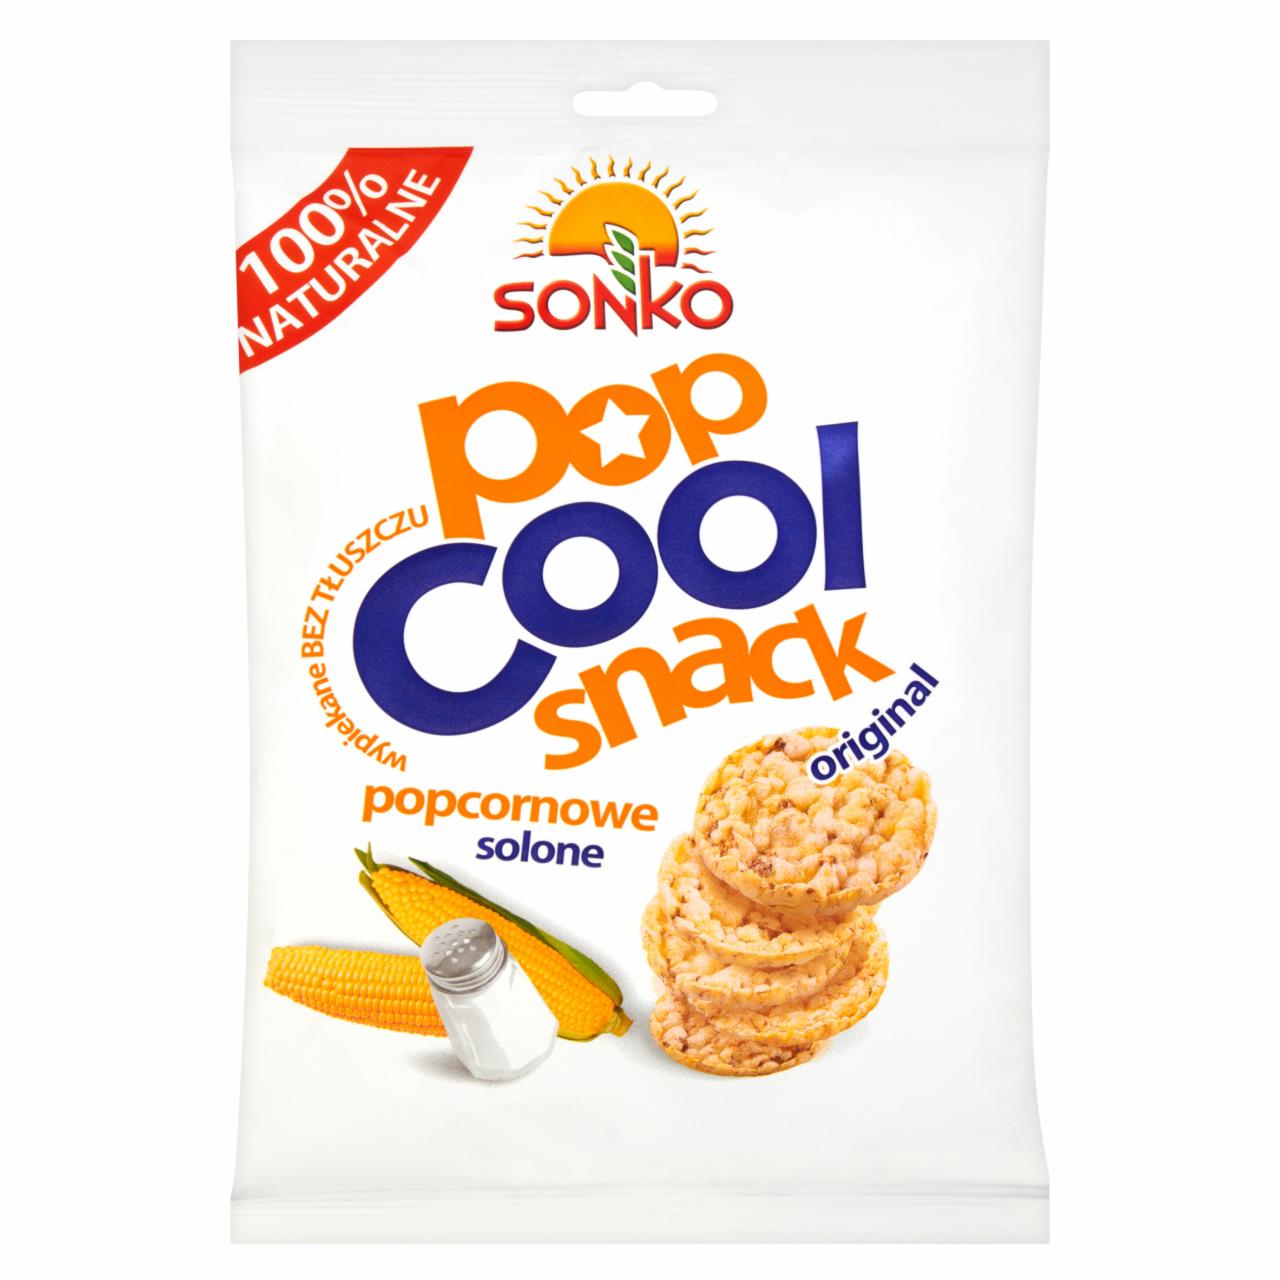 Zdjęcia - Sonko Popcool Snack original Sneksy popcornowe pełnoziarniste solone 60 g